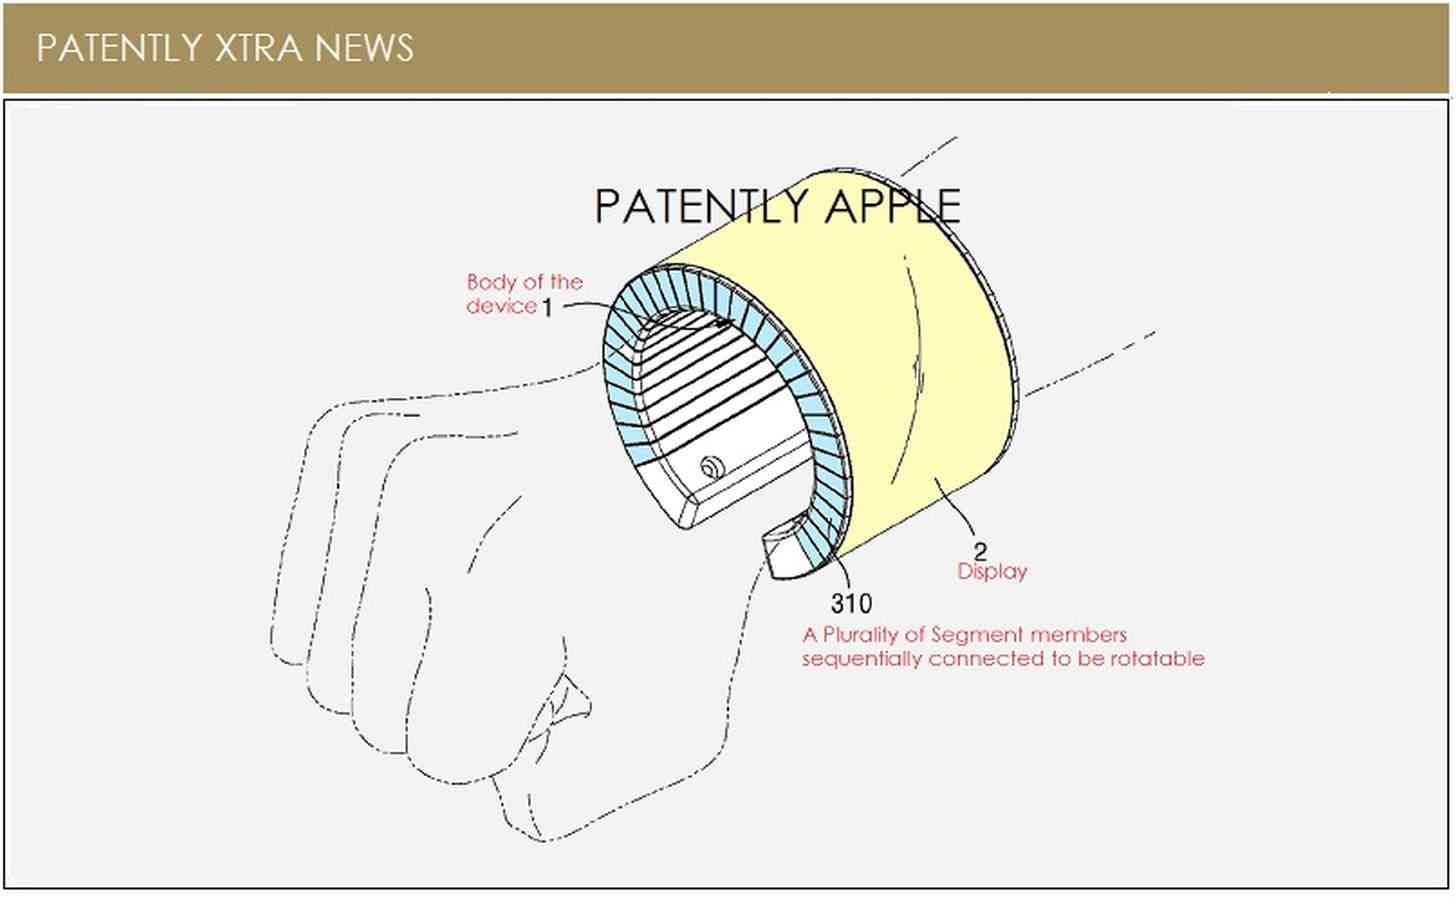 Samsung flexible smartphone patent